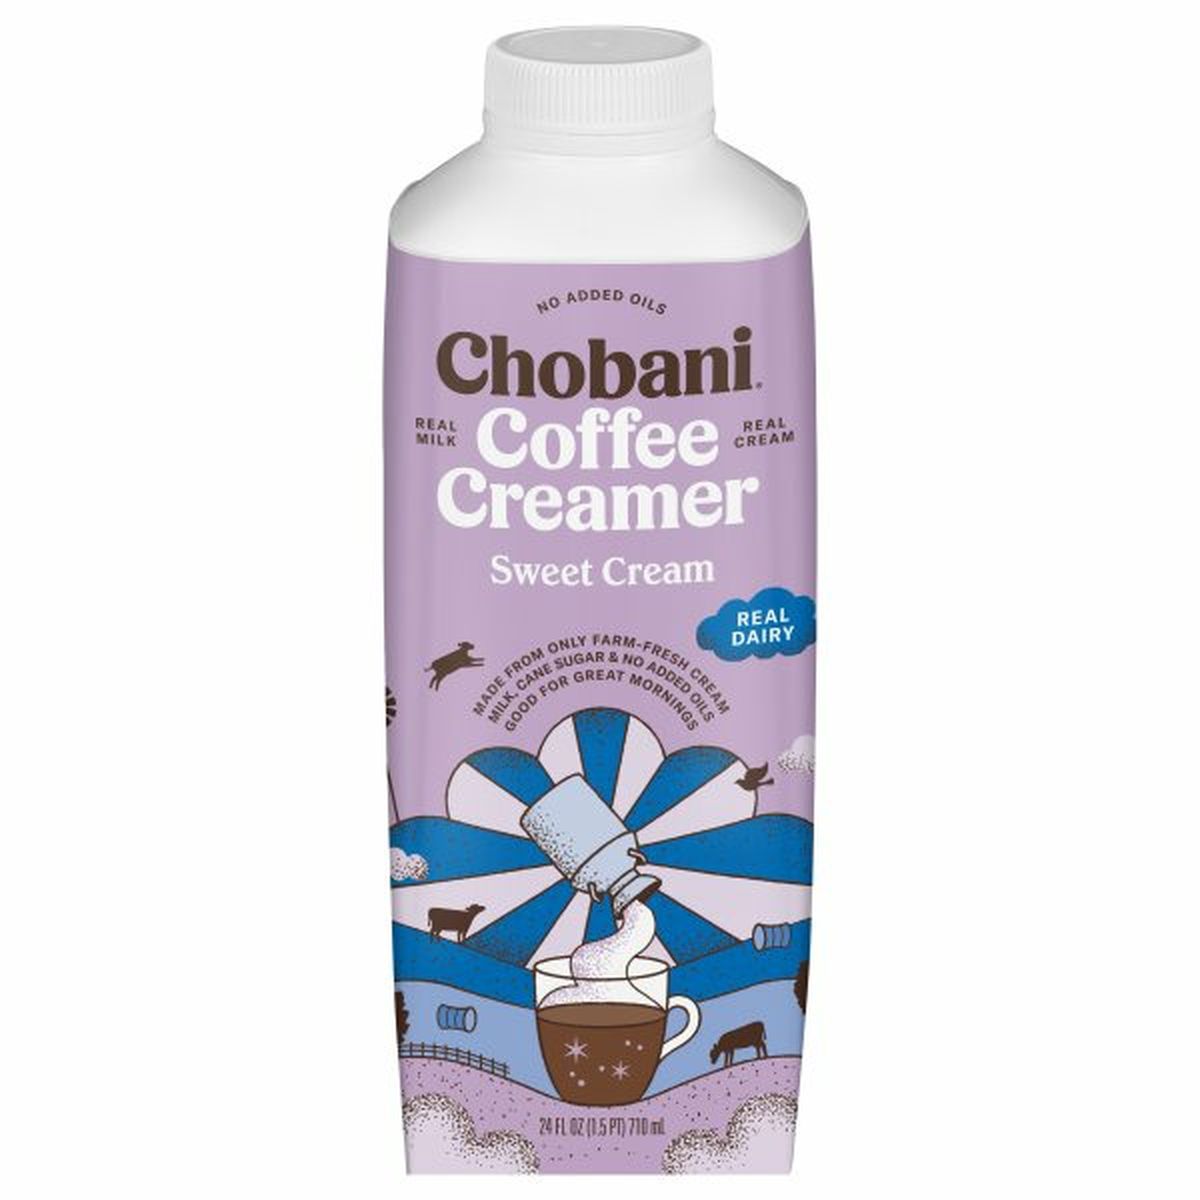 Calories in Chobani Coffee Creamer, Sweet Cream